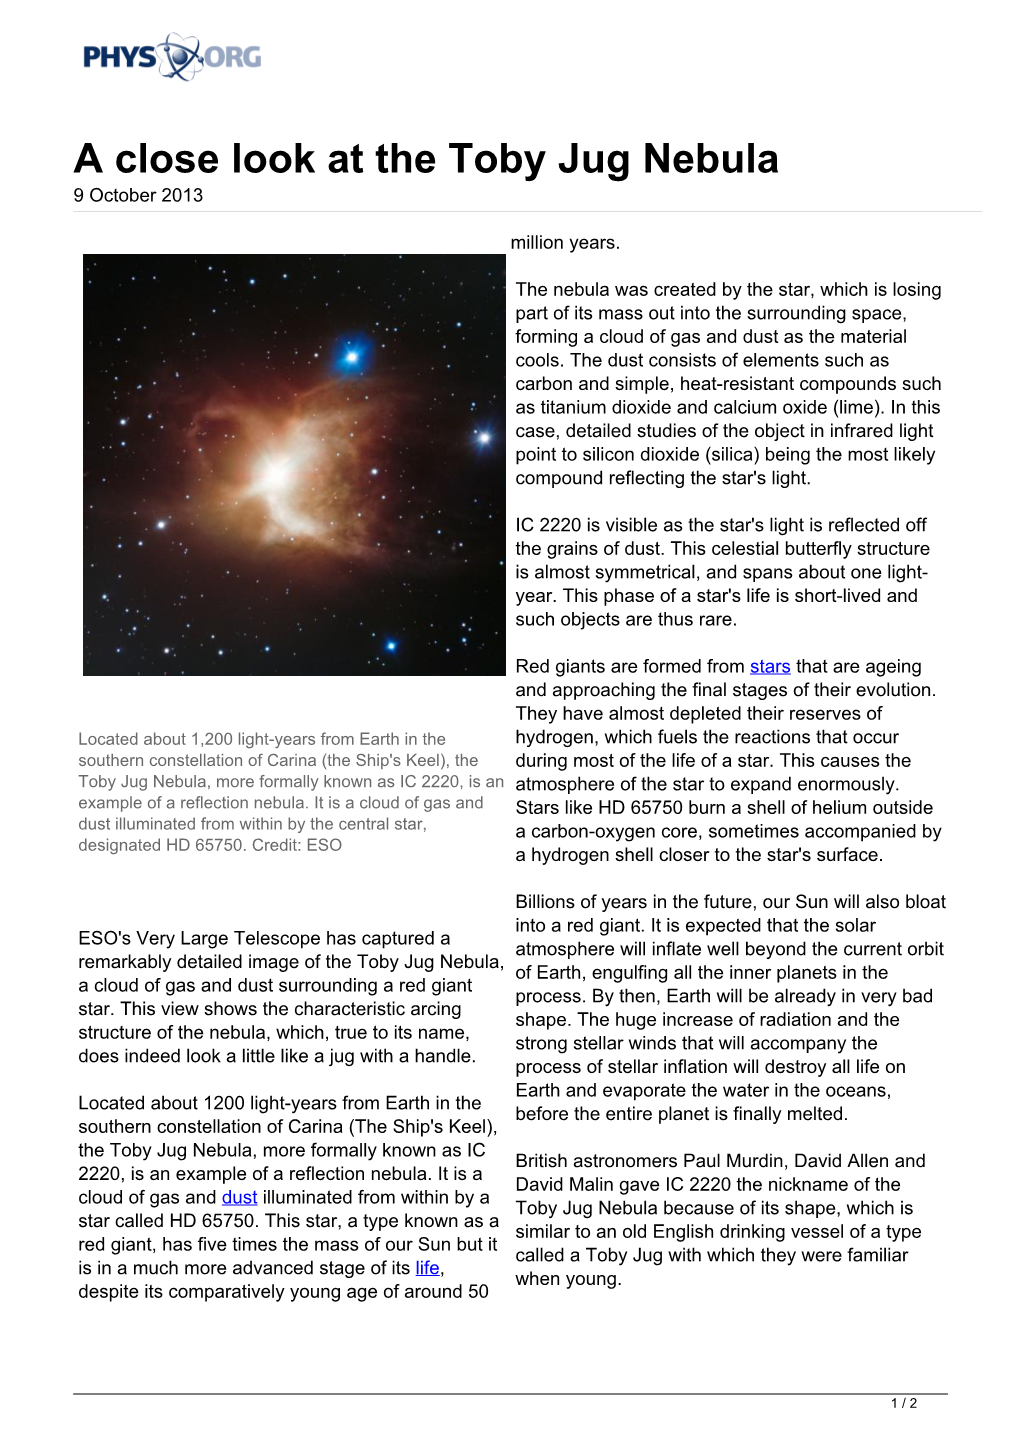 A Close Look at the Toby Jug Nebula 9 October 2013